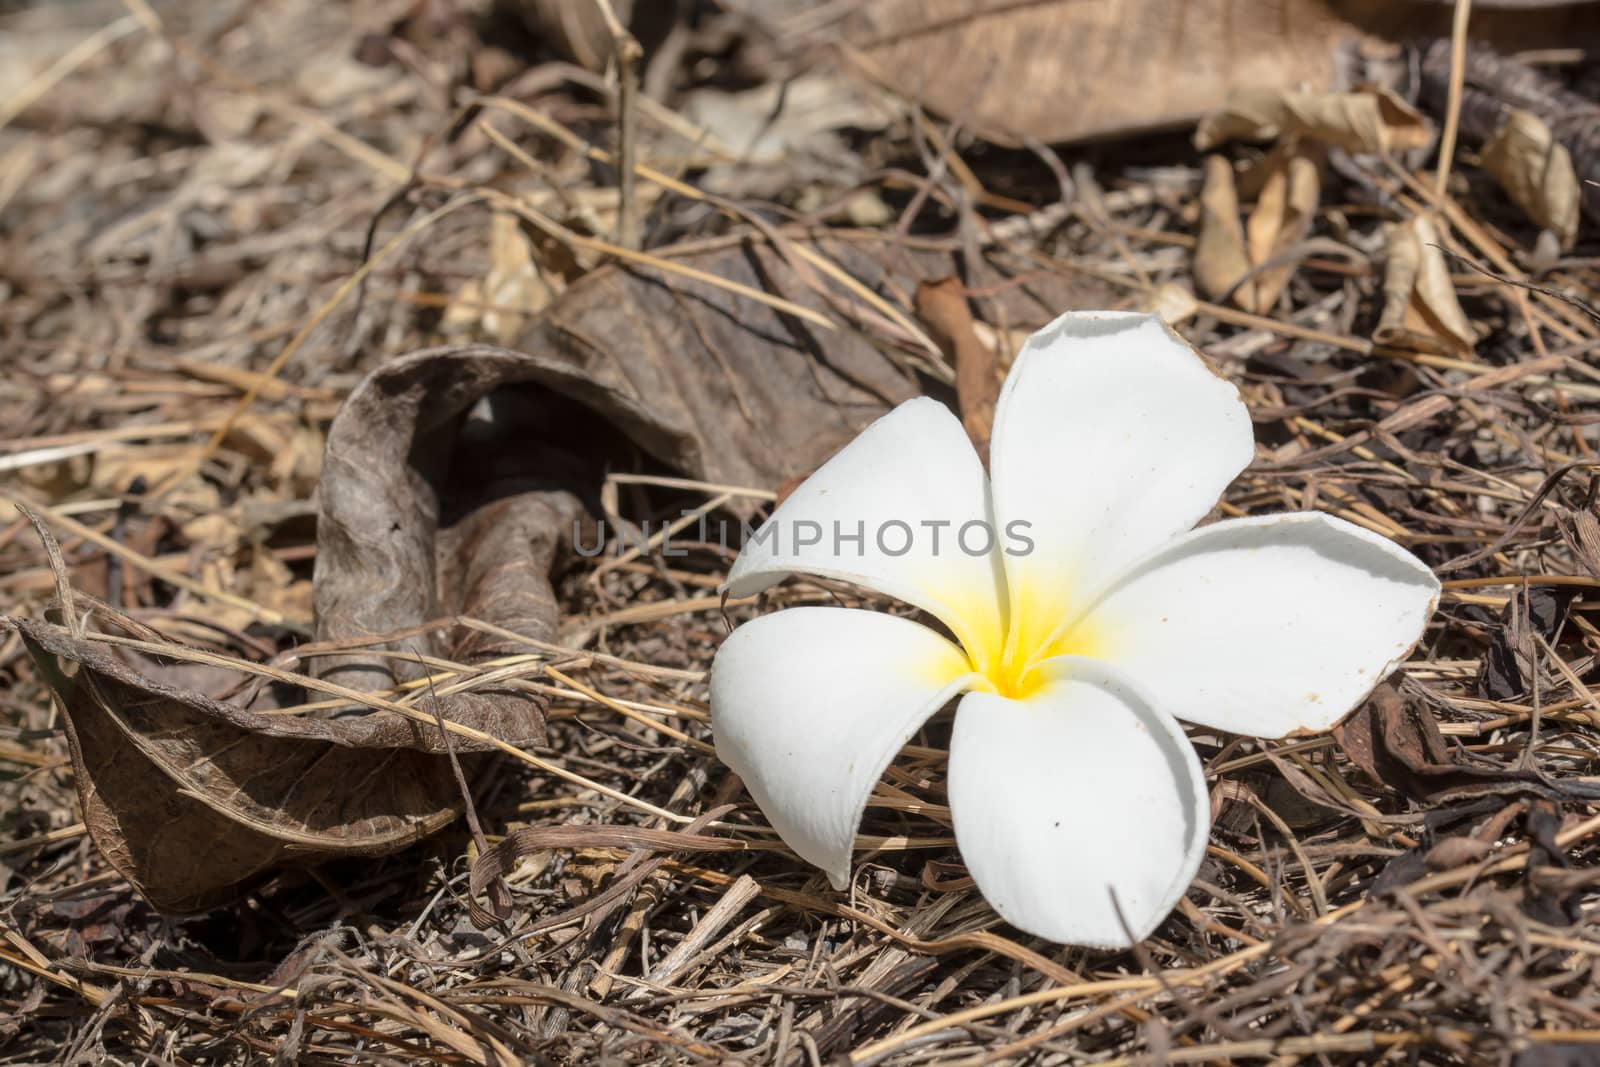 the gorgeous plumeria (frangipani) flowers on the ground under the sun light